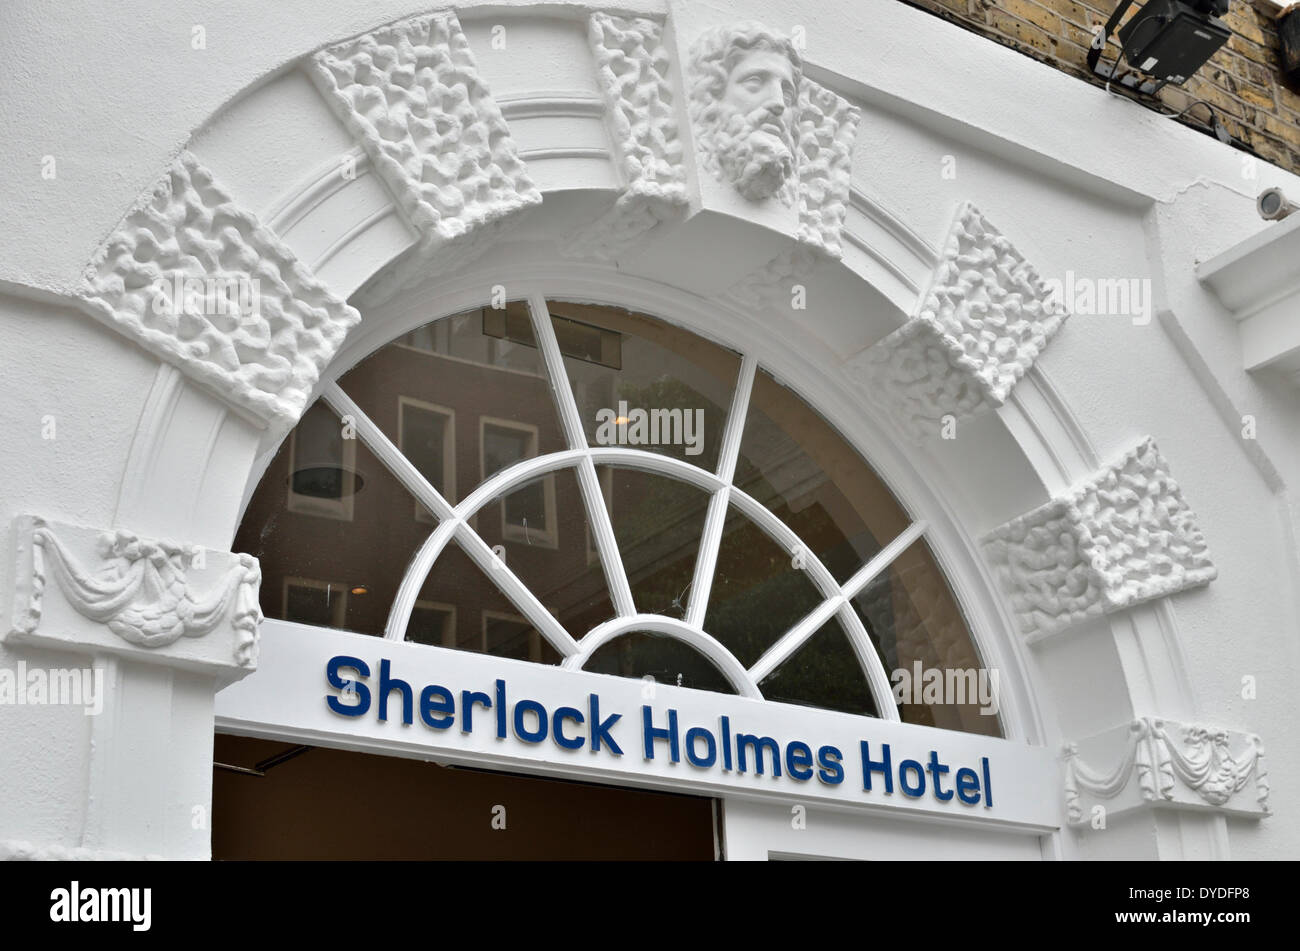 The Sherlock Holmes Hotel. Stock Photo